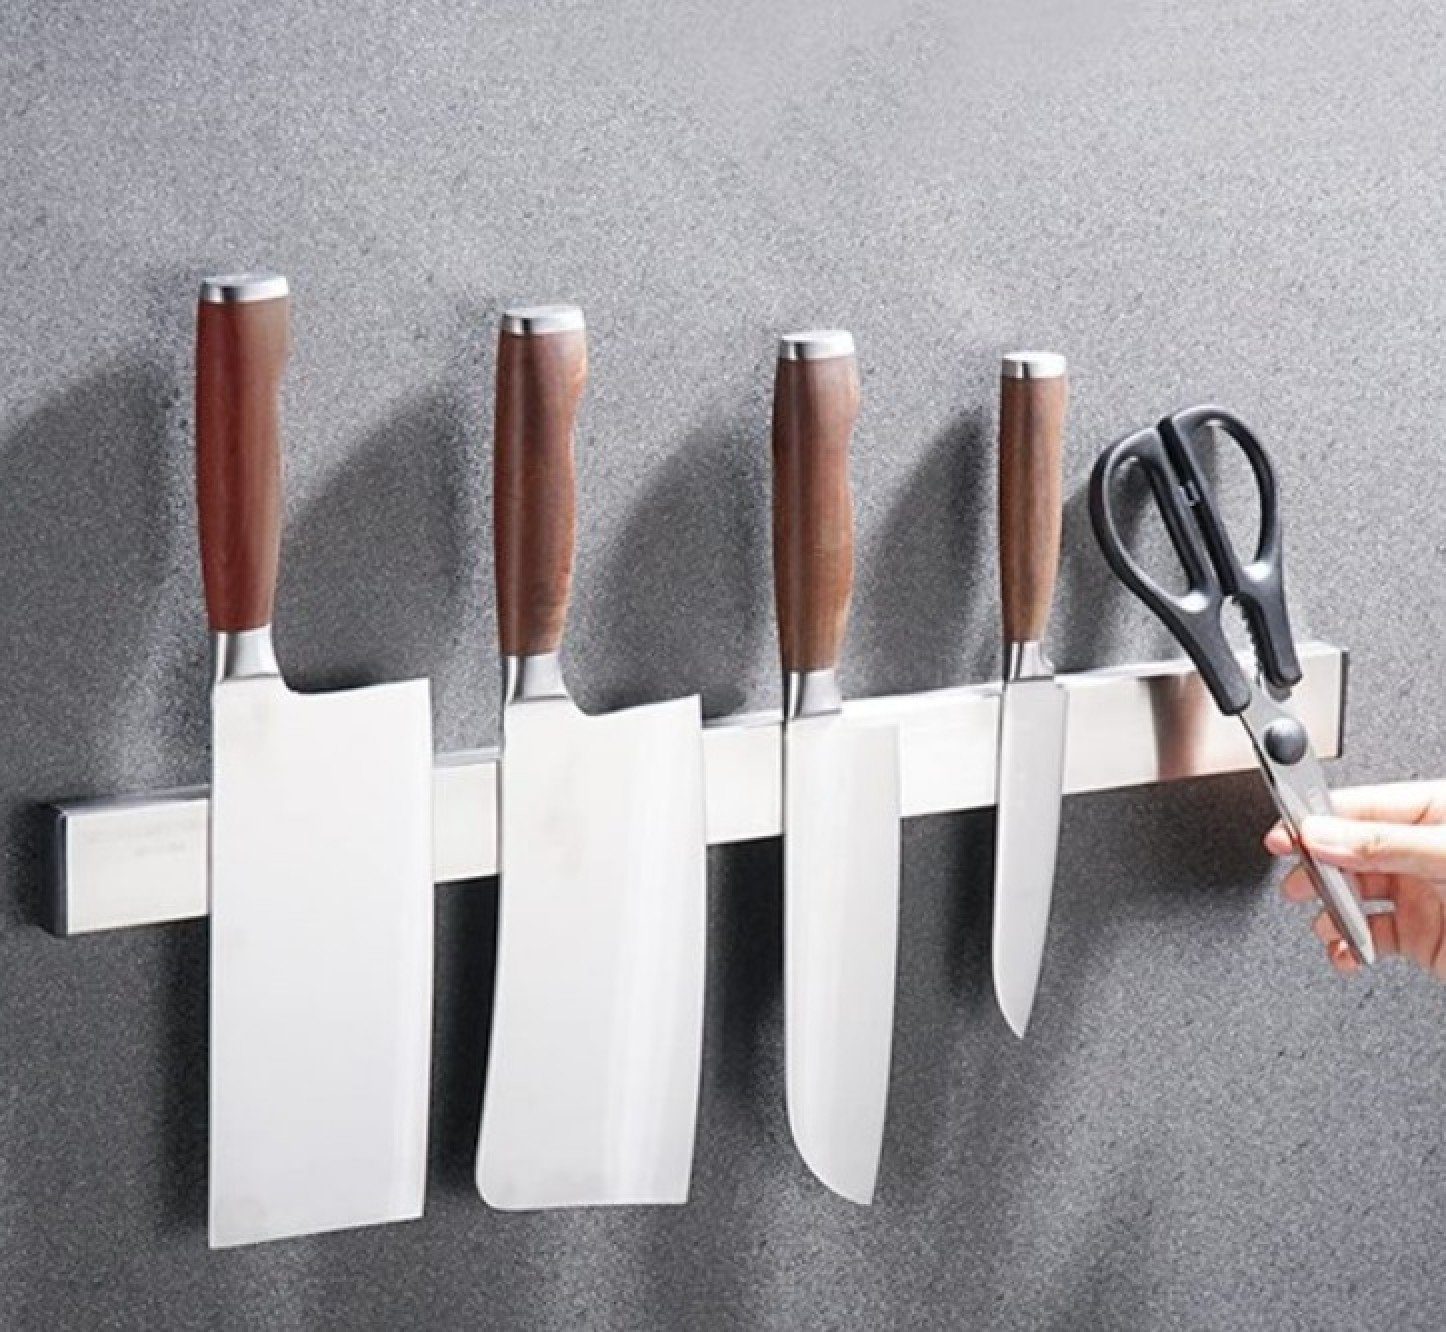 Wand-Magnet Ohne Set Messerhalter 3er selbstklebend BAYLI 40cm Messerleiste - Edelstahl Magnetleiste